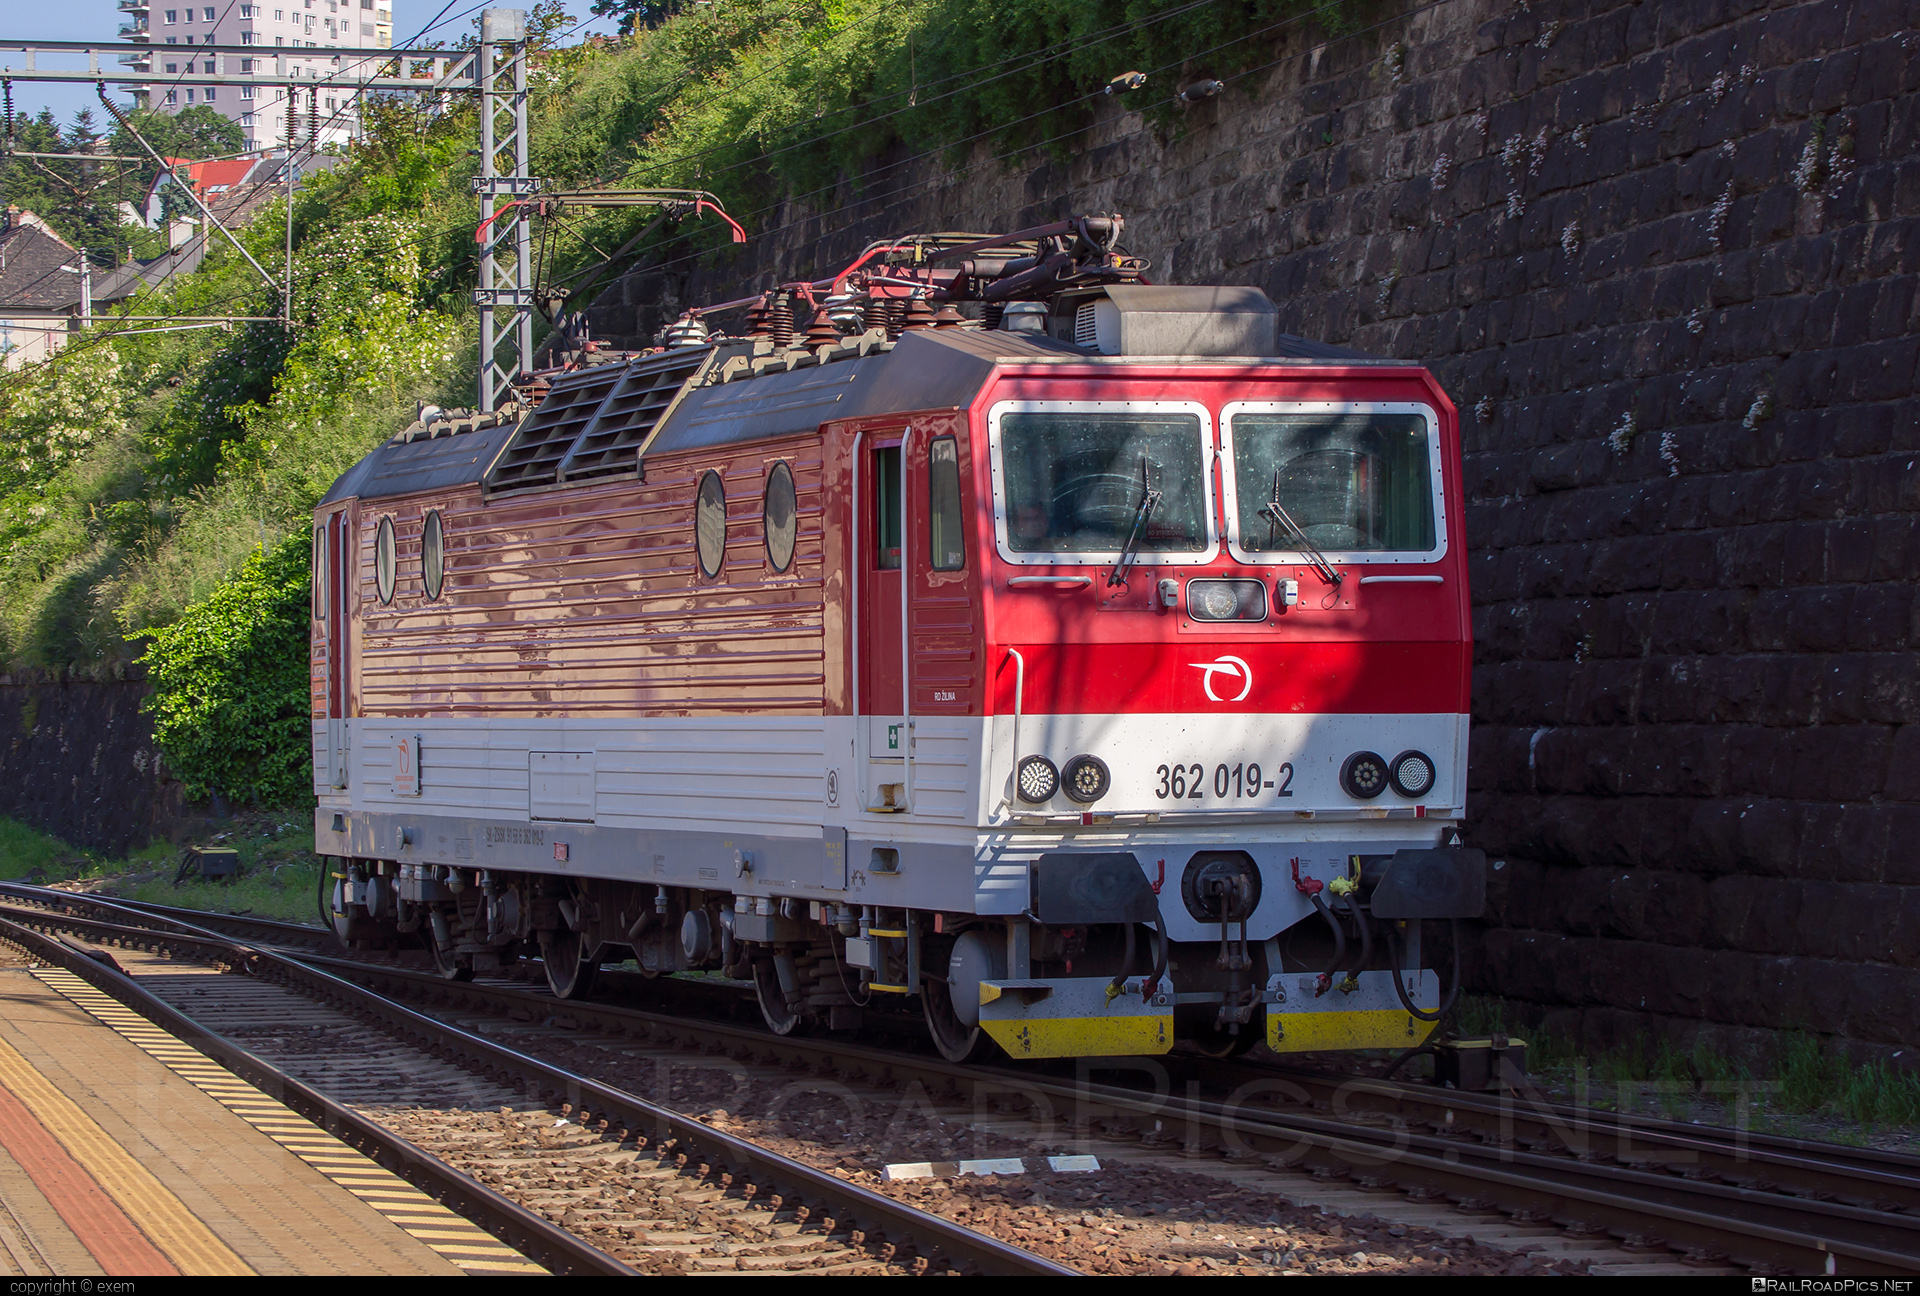 Škoda 69Er - 362 019-2 operated by Železničná Spoločnost' Slovensko, a.s. #ZeleznicnaSpolocnostSlovensko #eso #locomotive362 #rychleeso #skoda #skoda69er #zssk